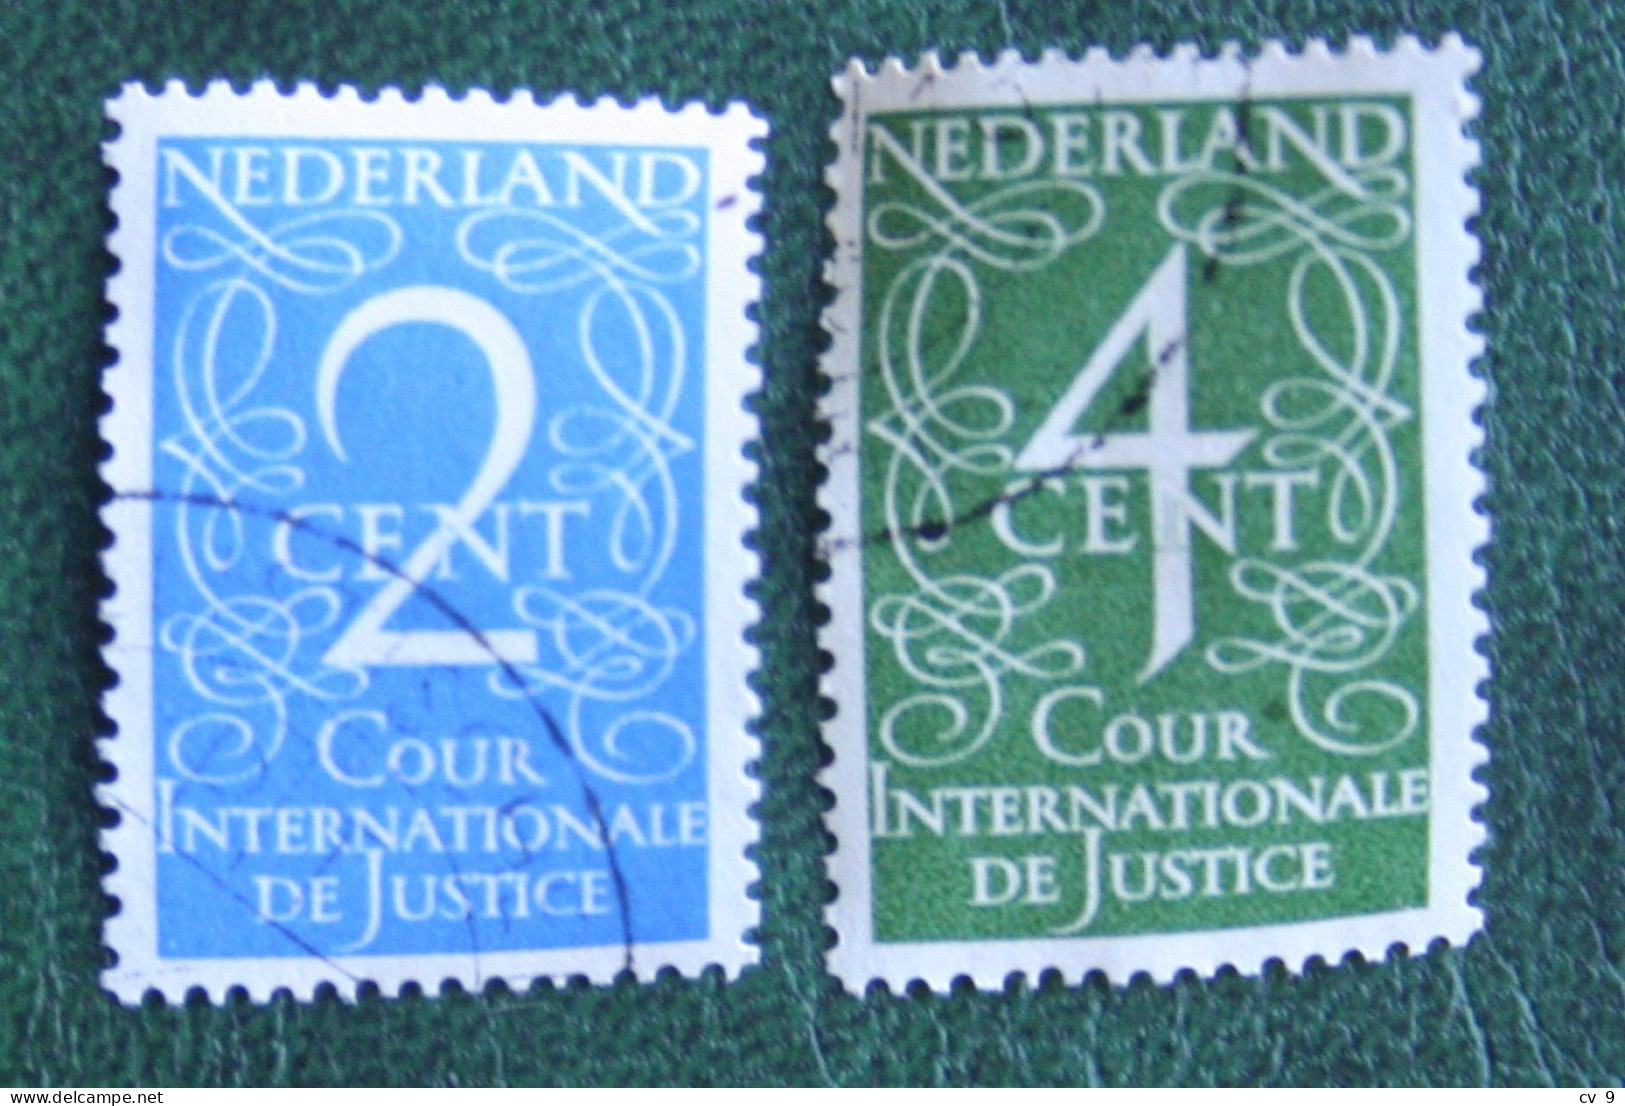 Dienst Cour Internationale De Justice NVPH D25-D26 D 25 (Mi 25-26) 1950 Gestempeld / Used NEDERLAND / NIEDERLANDE - Dienstzegels